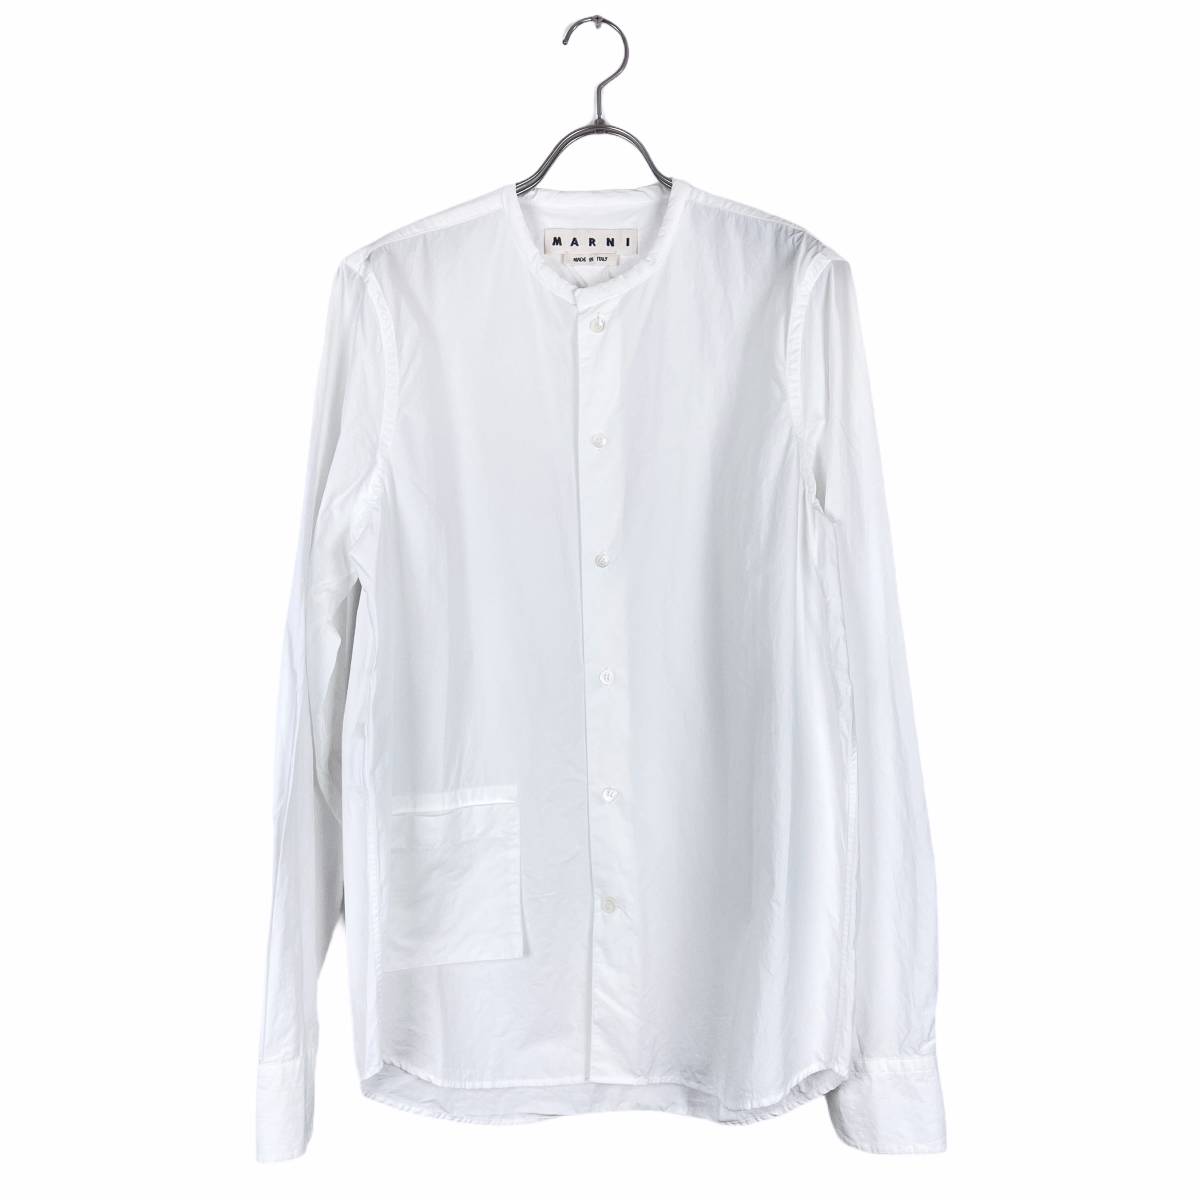 MARNI(マルニ）L/S collarless shirts (white）